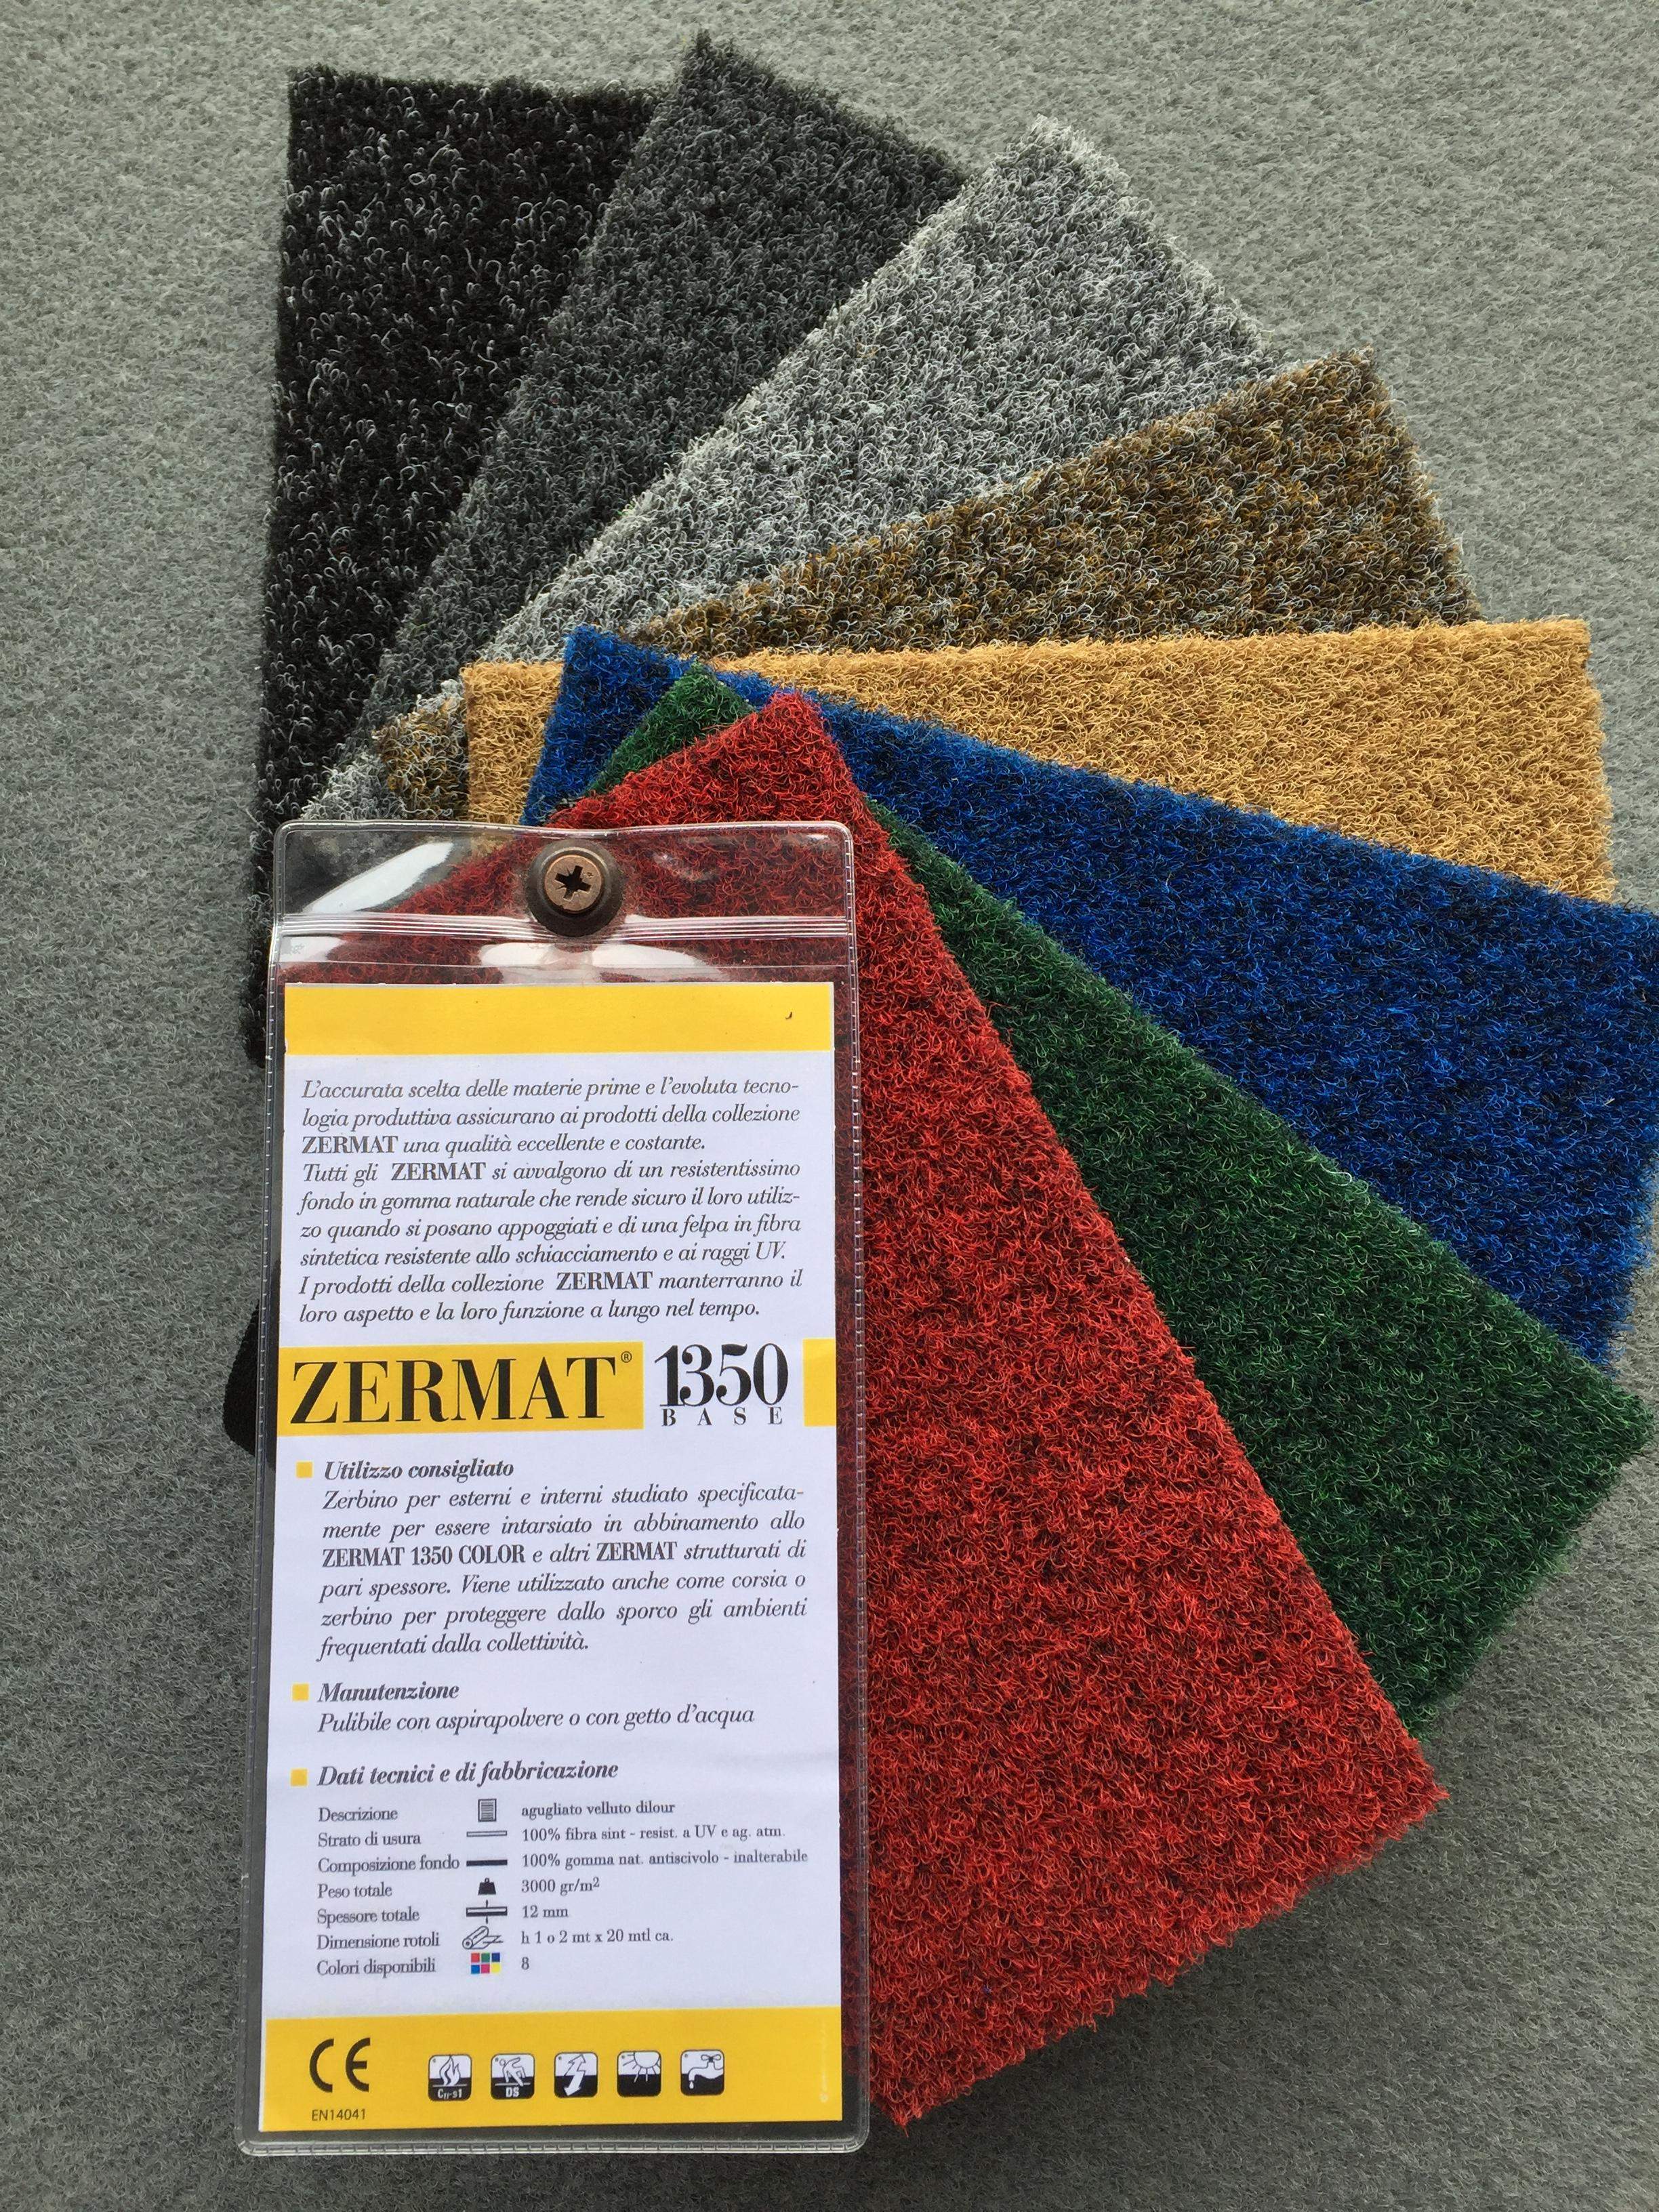 Zermat 1350 zerbini personalizzati